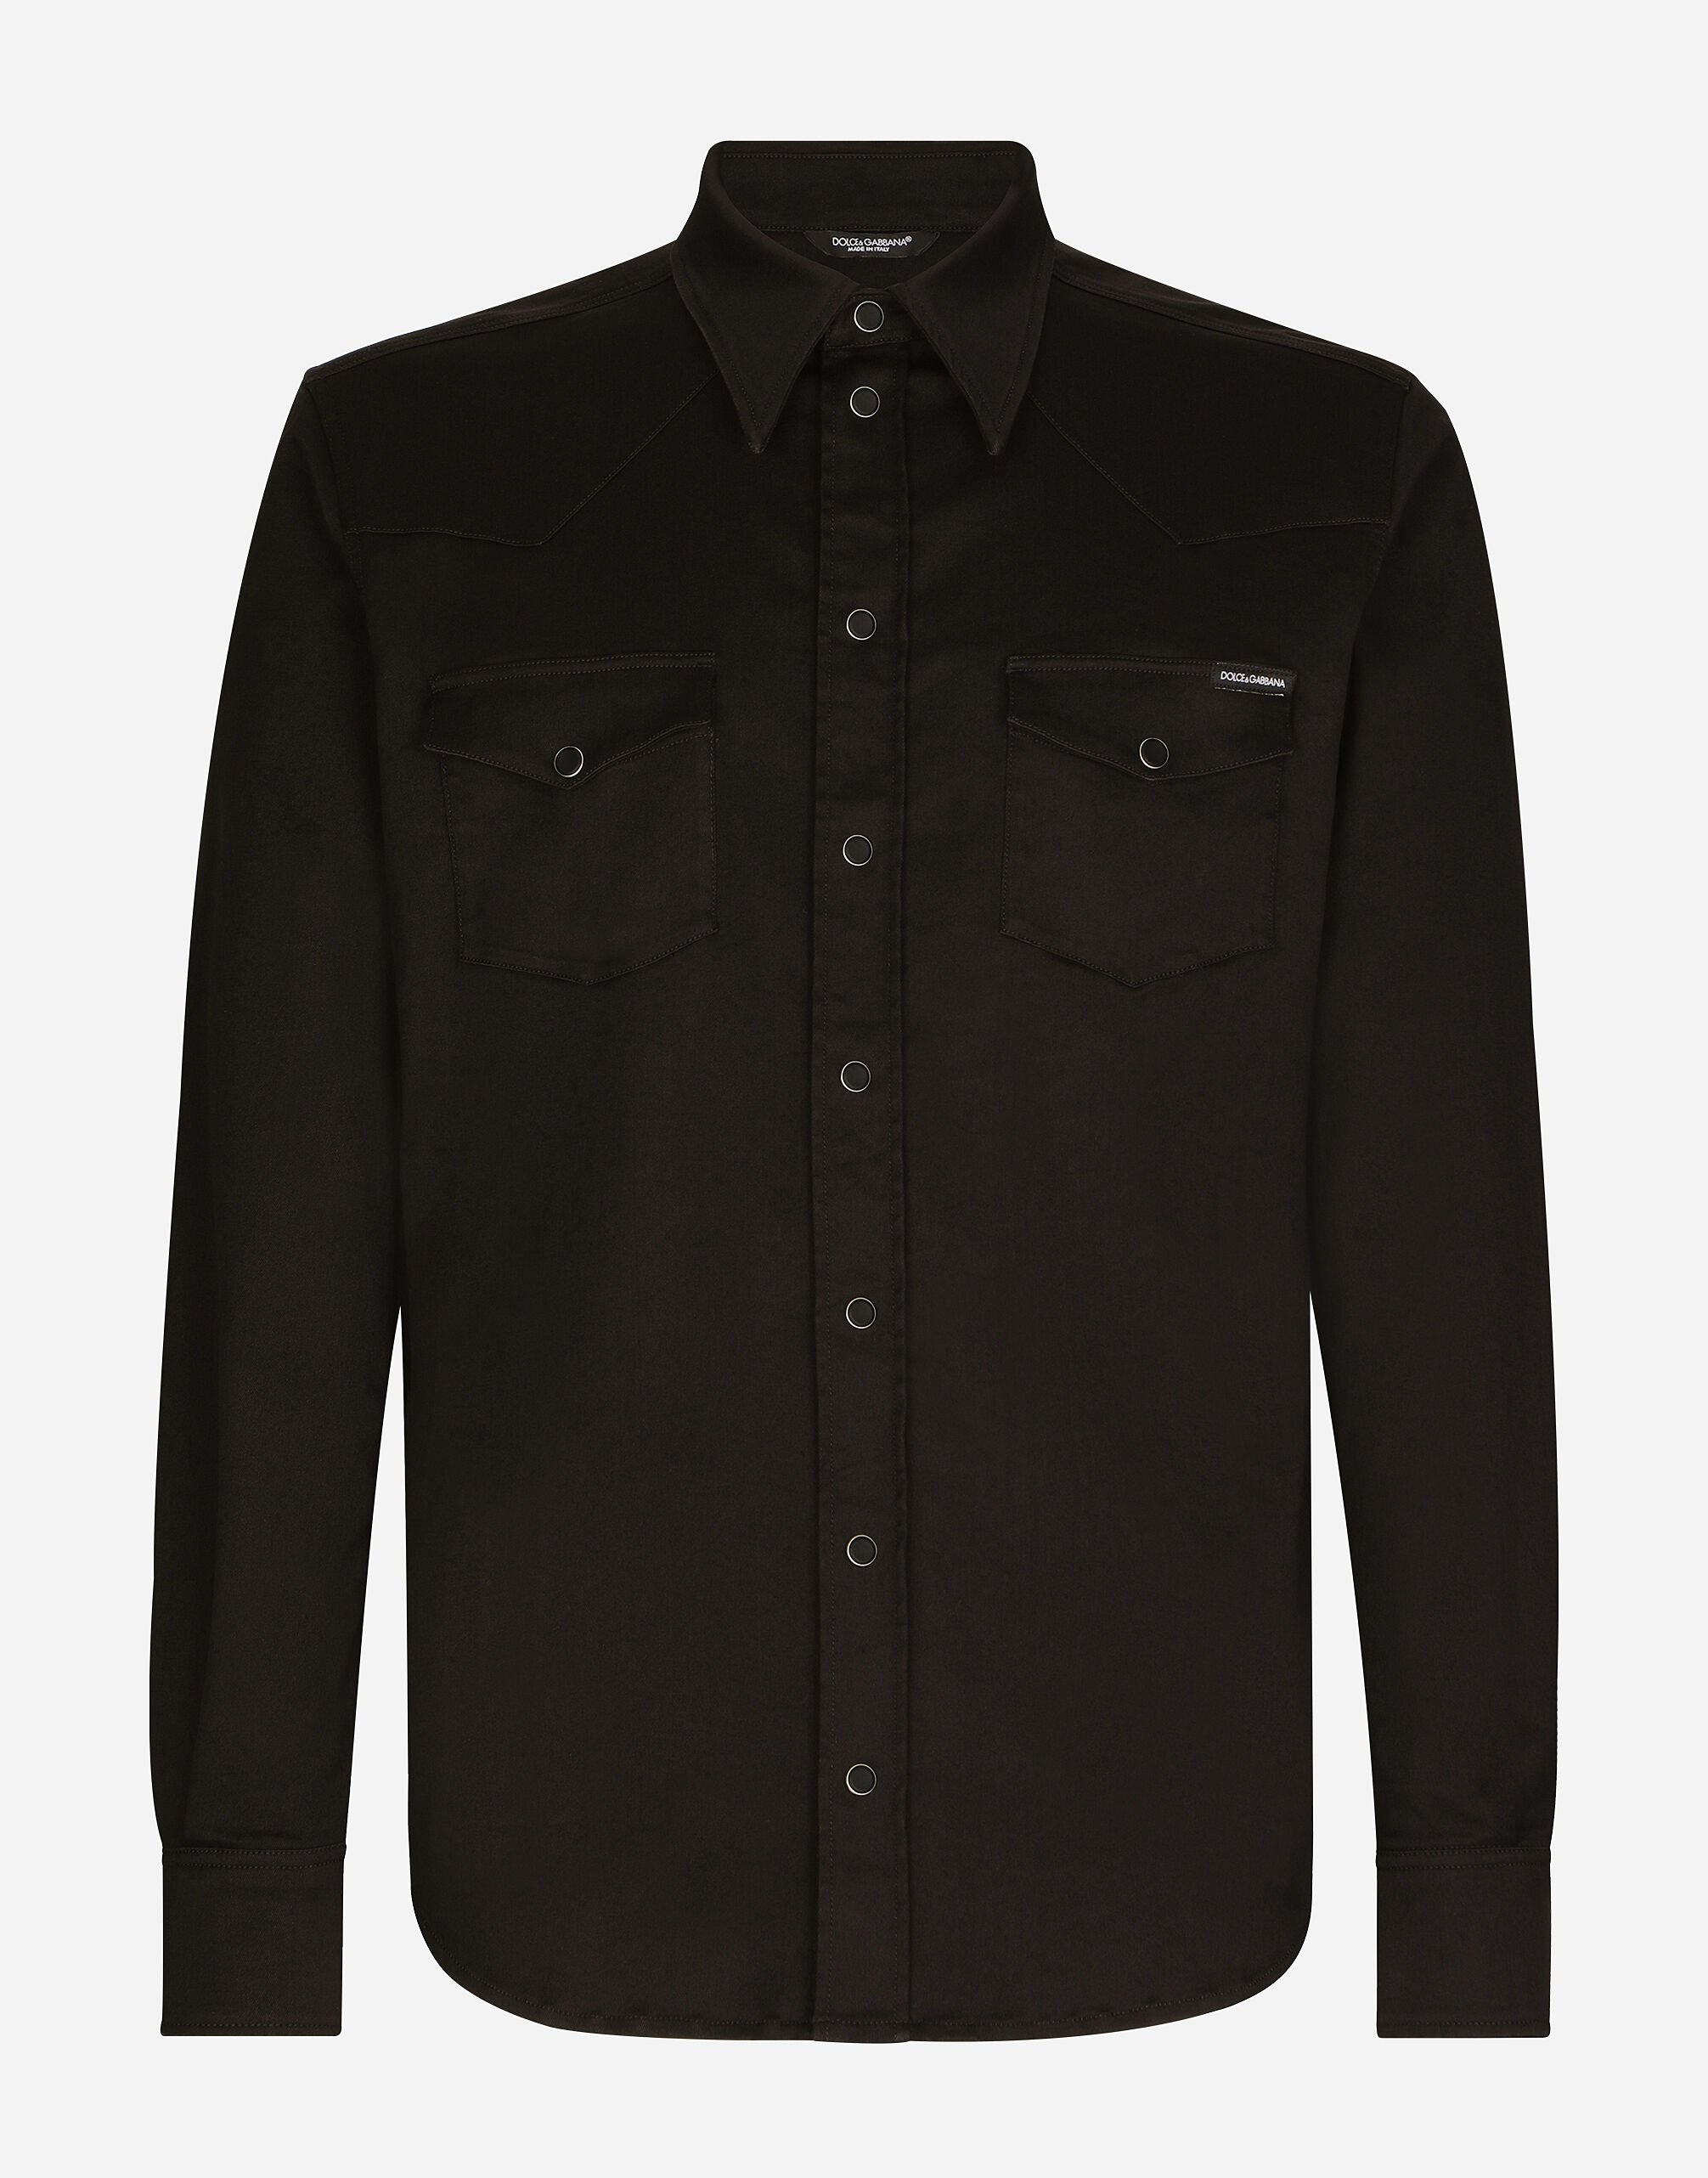 Dolce & Gabbana قميص من دنيم مرن أسود مطلي متعدد الألوان G9NL5DG8GW9